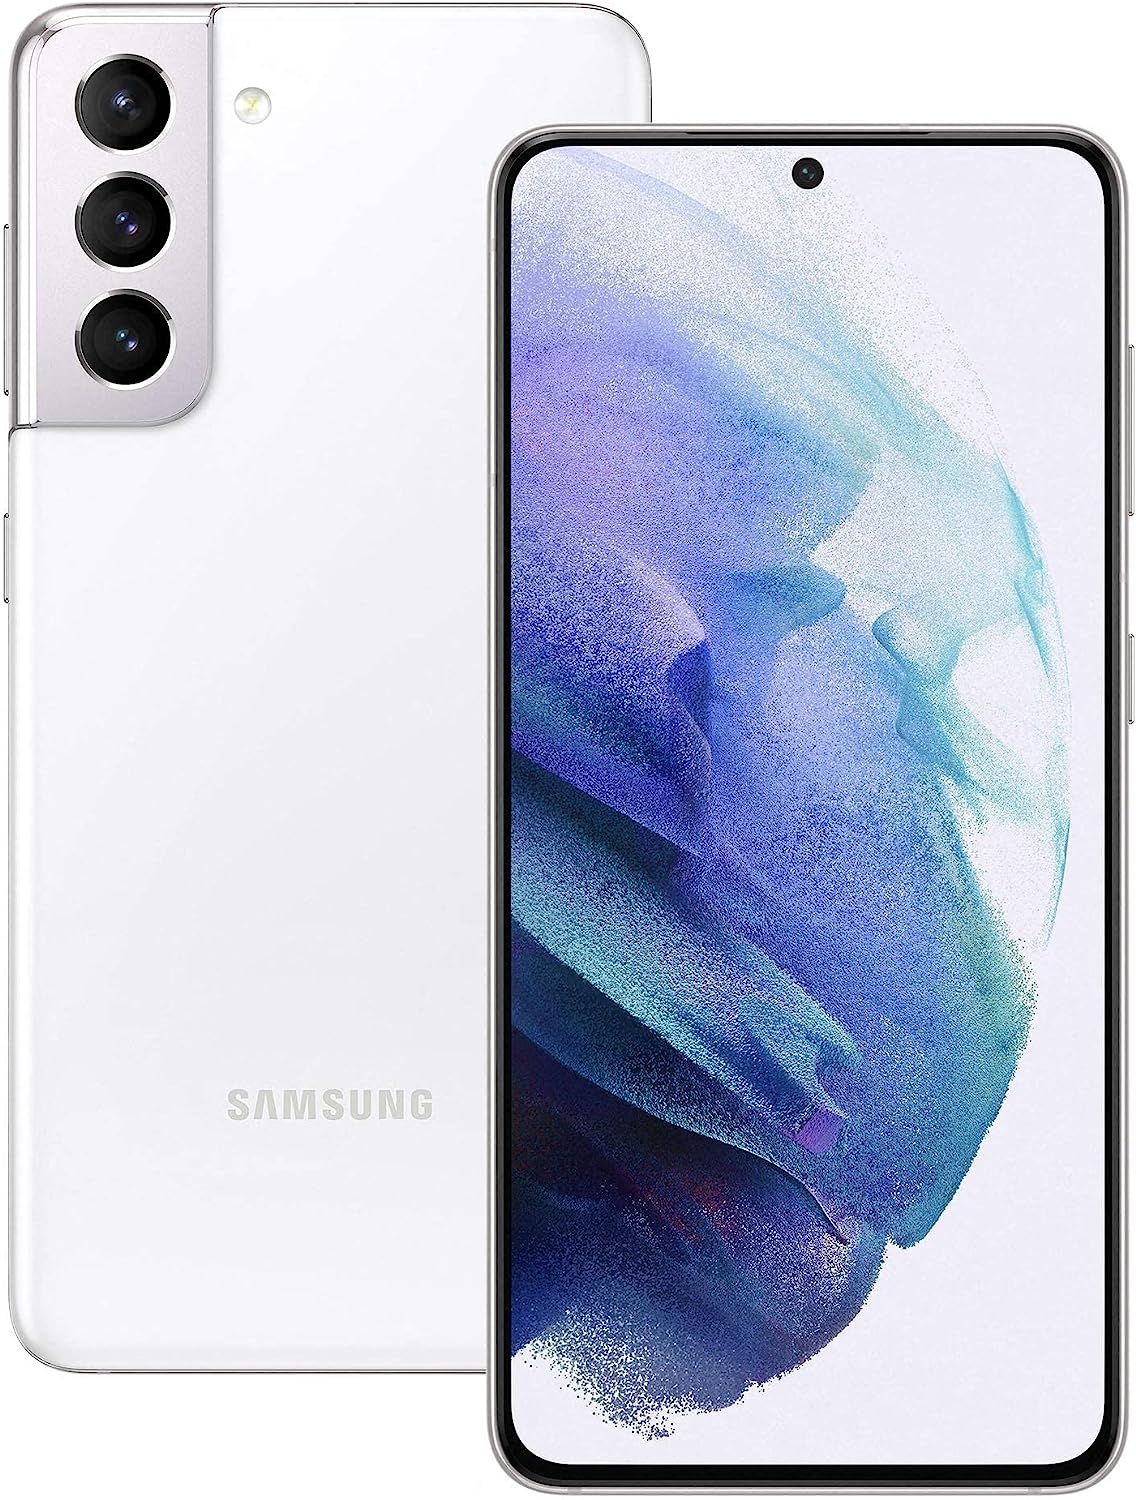 Samsung Galaxy S21 5G 128GB White Very Good 128GB White Very Good